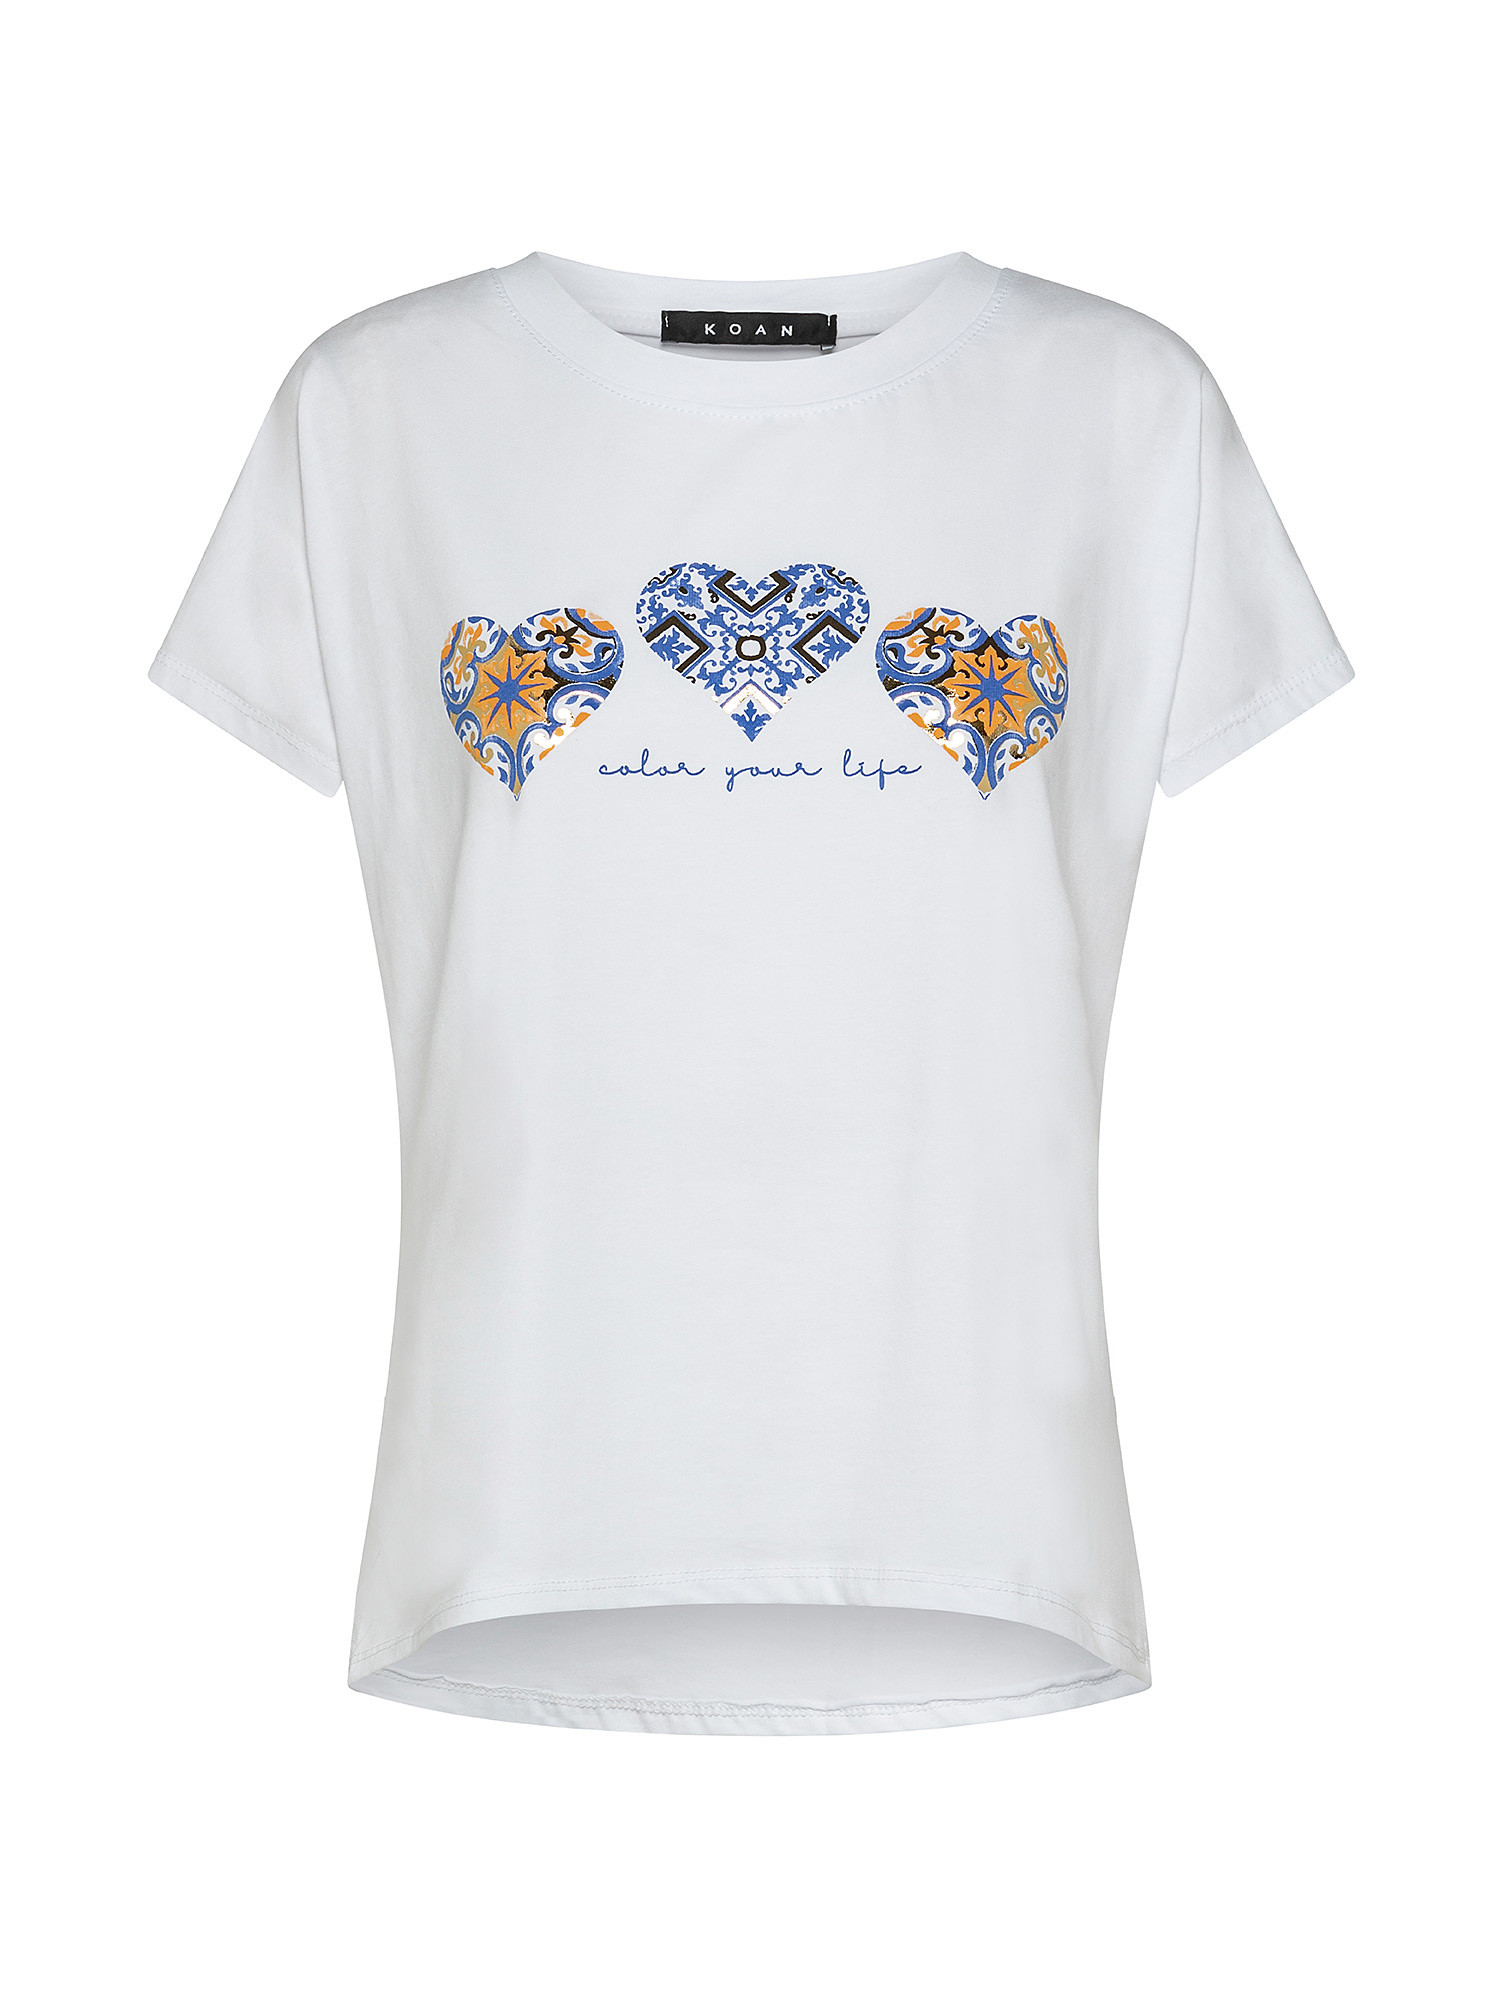 T-shirt con stampa cuori, Bianco, large image number 0